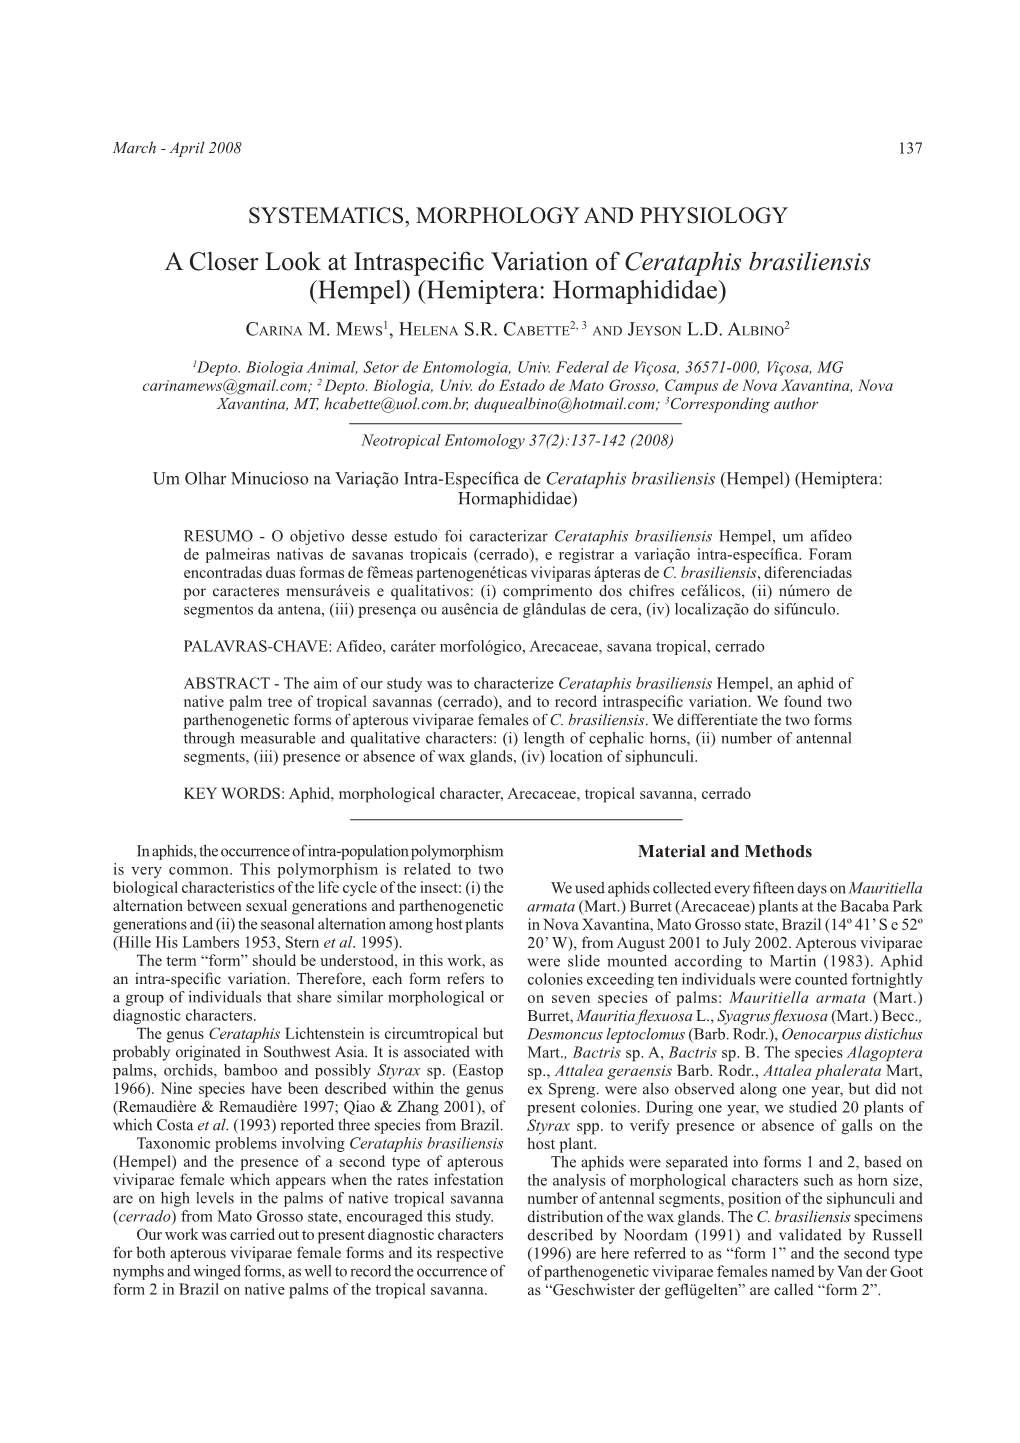 A Closer Look at Intraspecific Variation of Cerataphis Brasiliensis (Hempel) (Hemiptera: Hormaphididae)